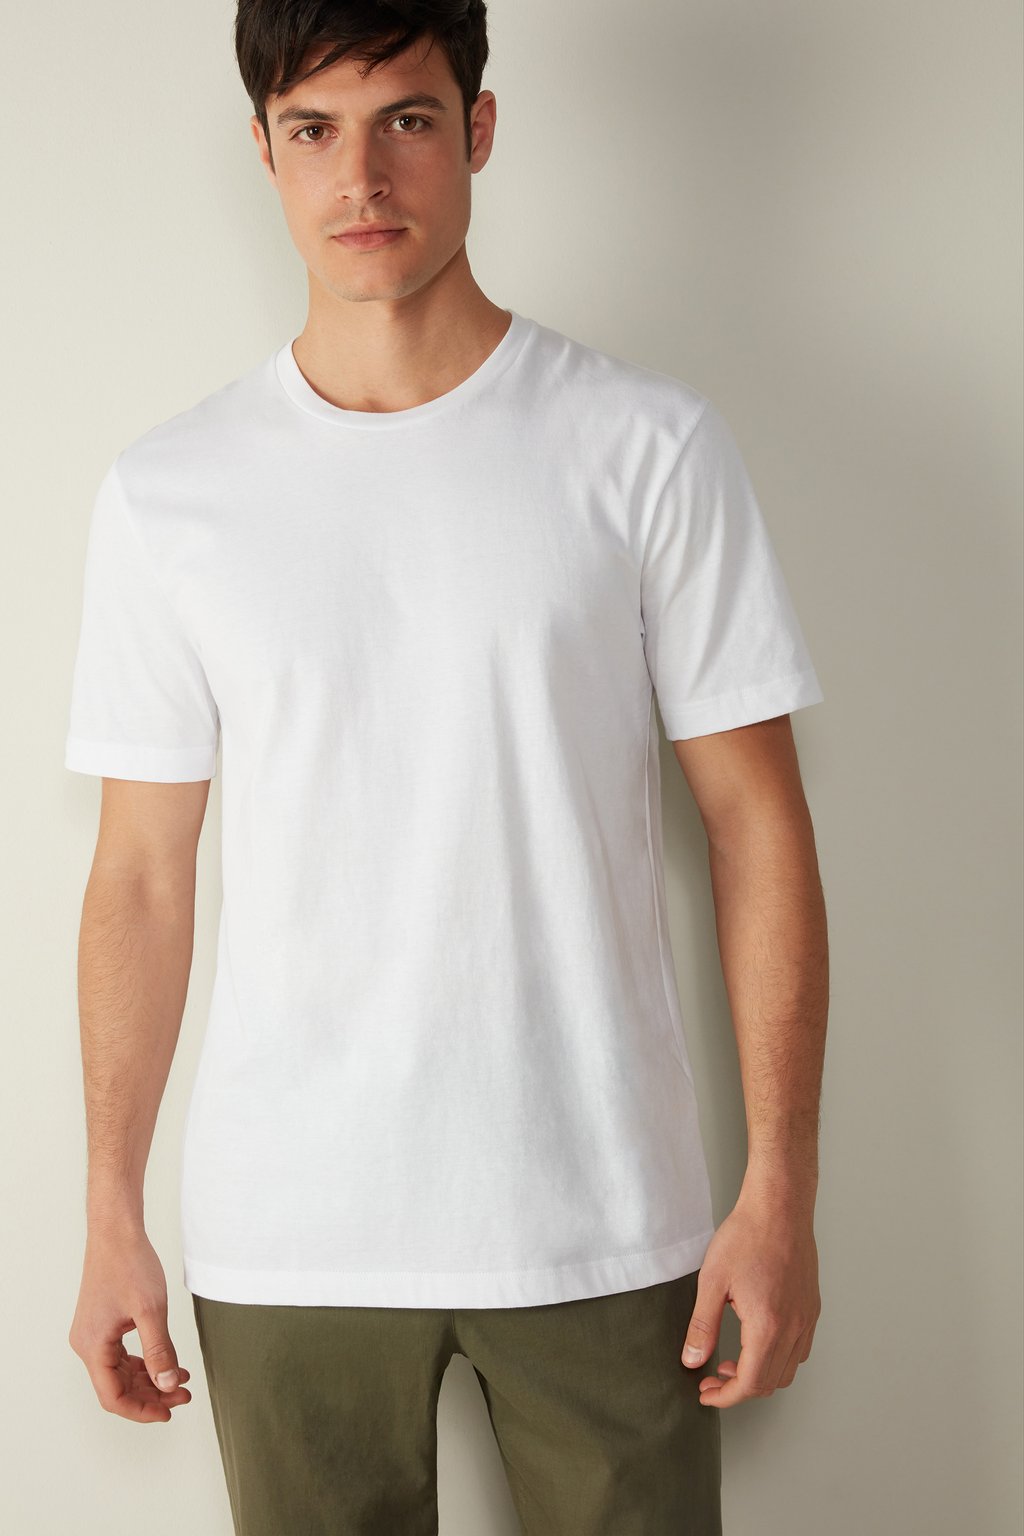 Базовая футболка Intimissimi, белый